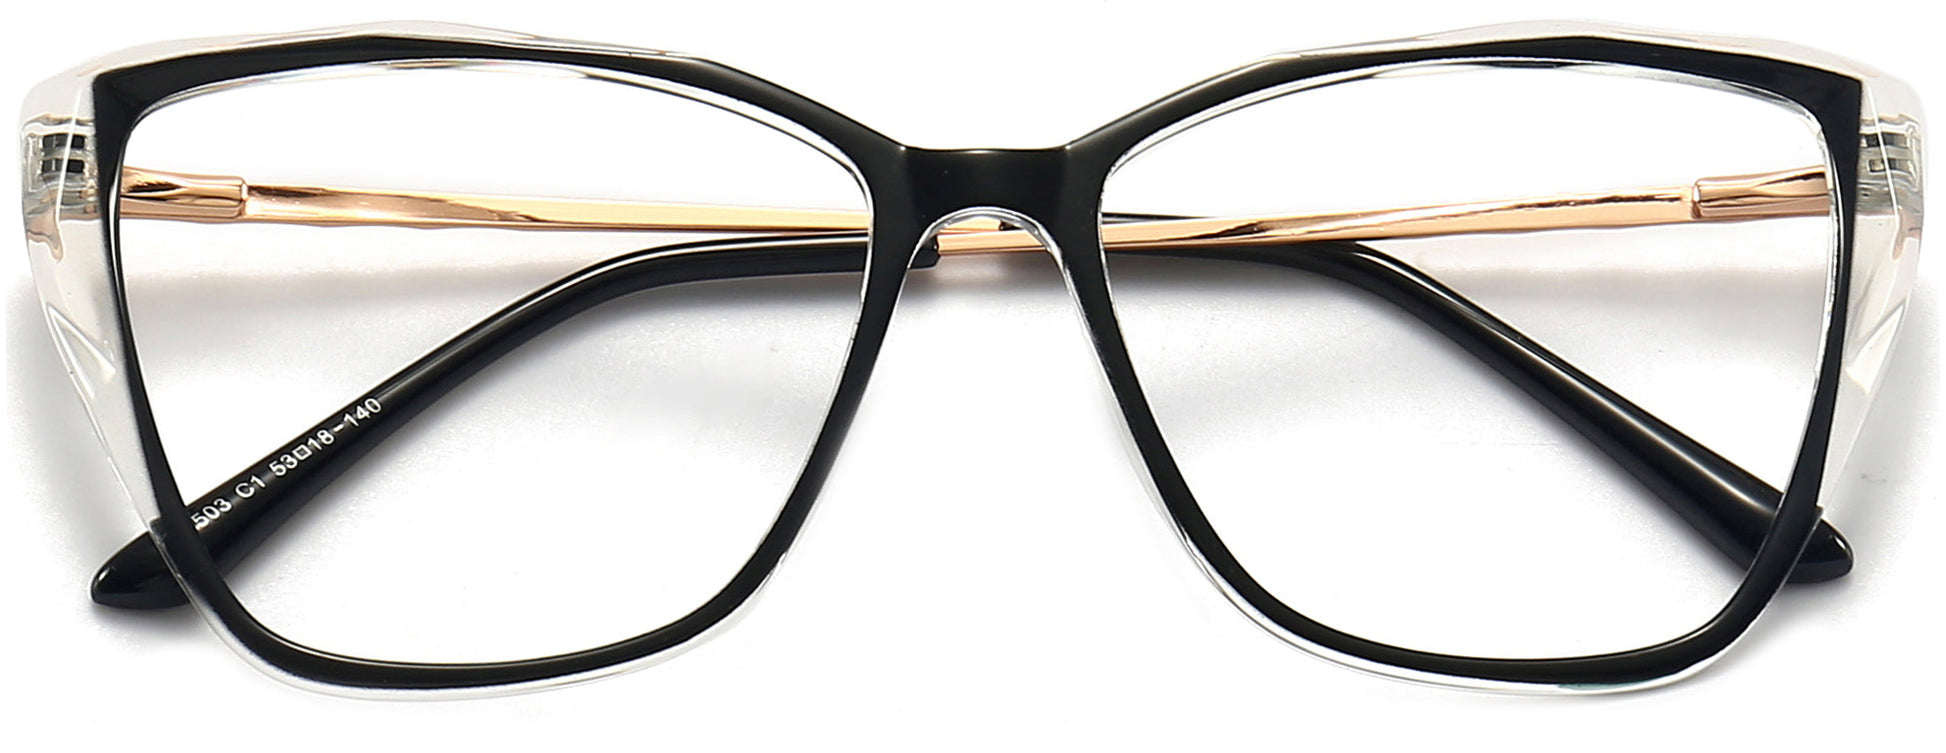 Dayana Cateye Black Eyeglasses rom ANRRI, closed view